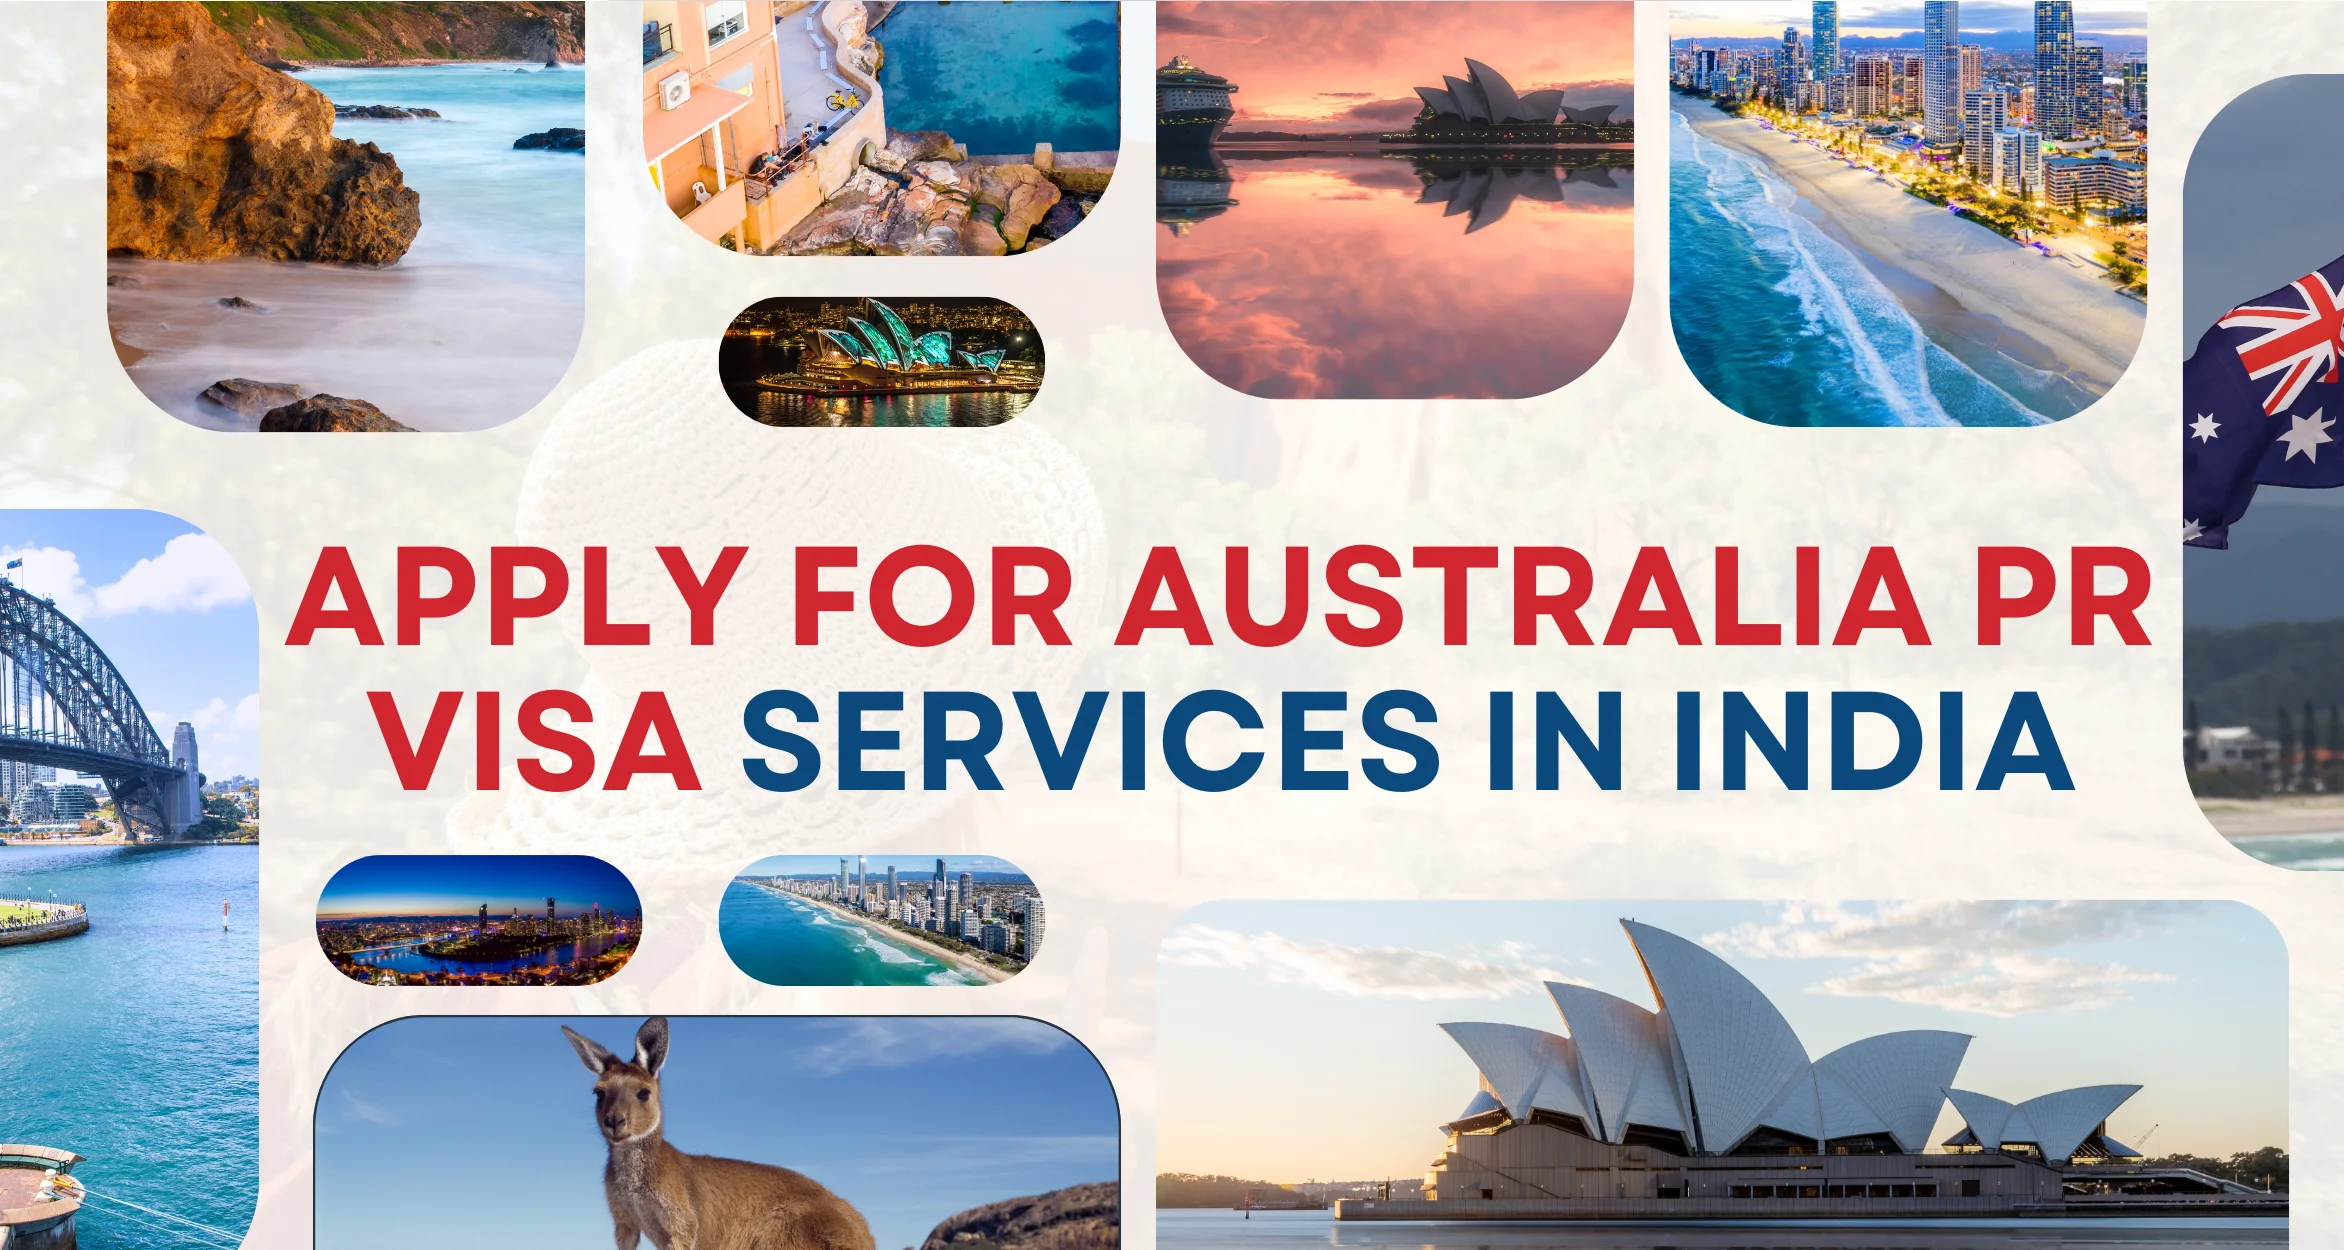 Apply for Australia PR Visa services in India